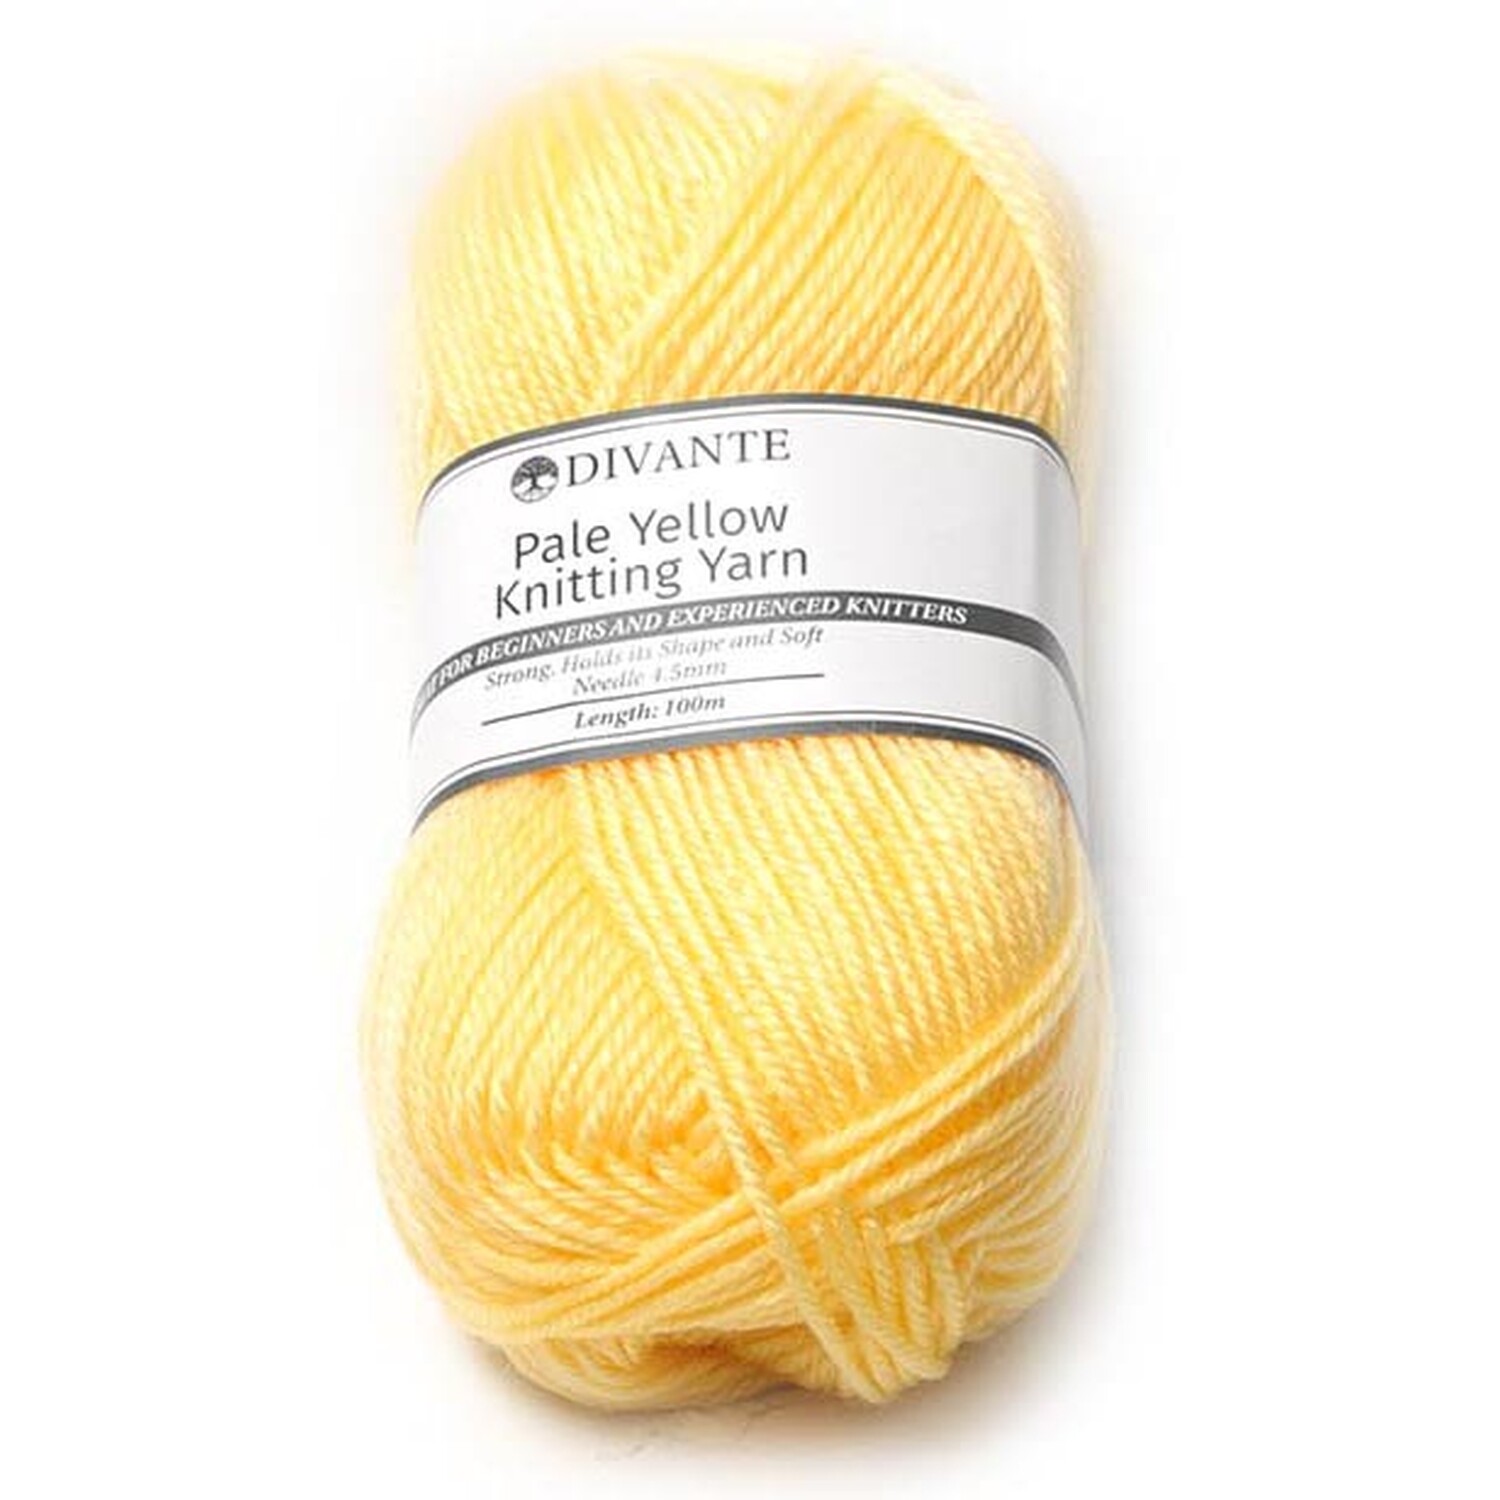 Divante Value Knitting Yarn - Pale Yellow Image